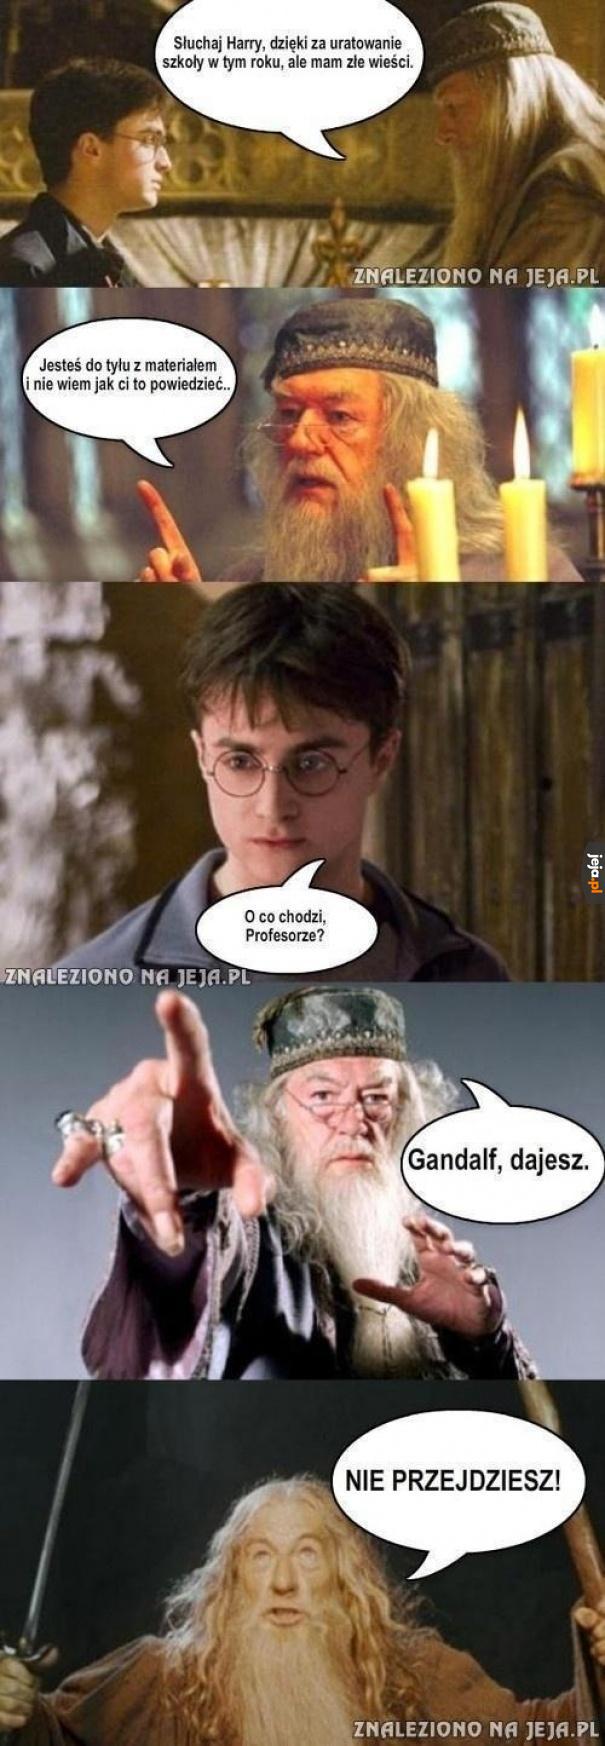 Gdyby Harry Potter był realistyczny